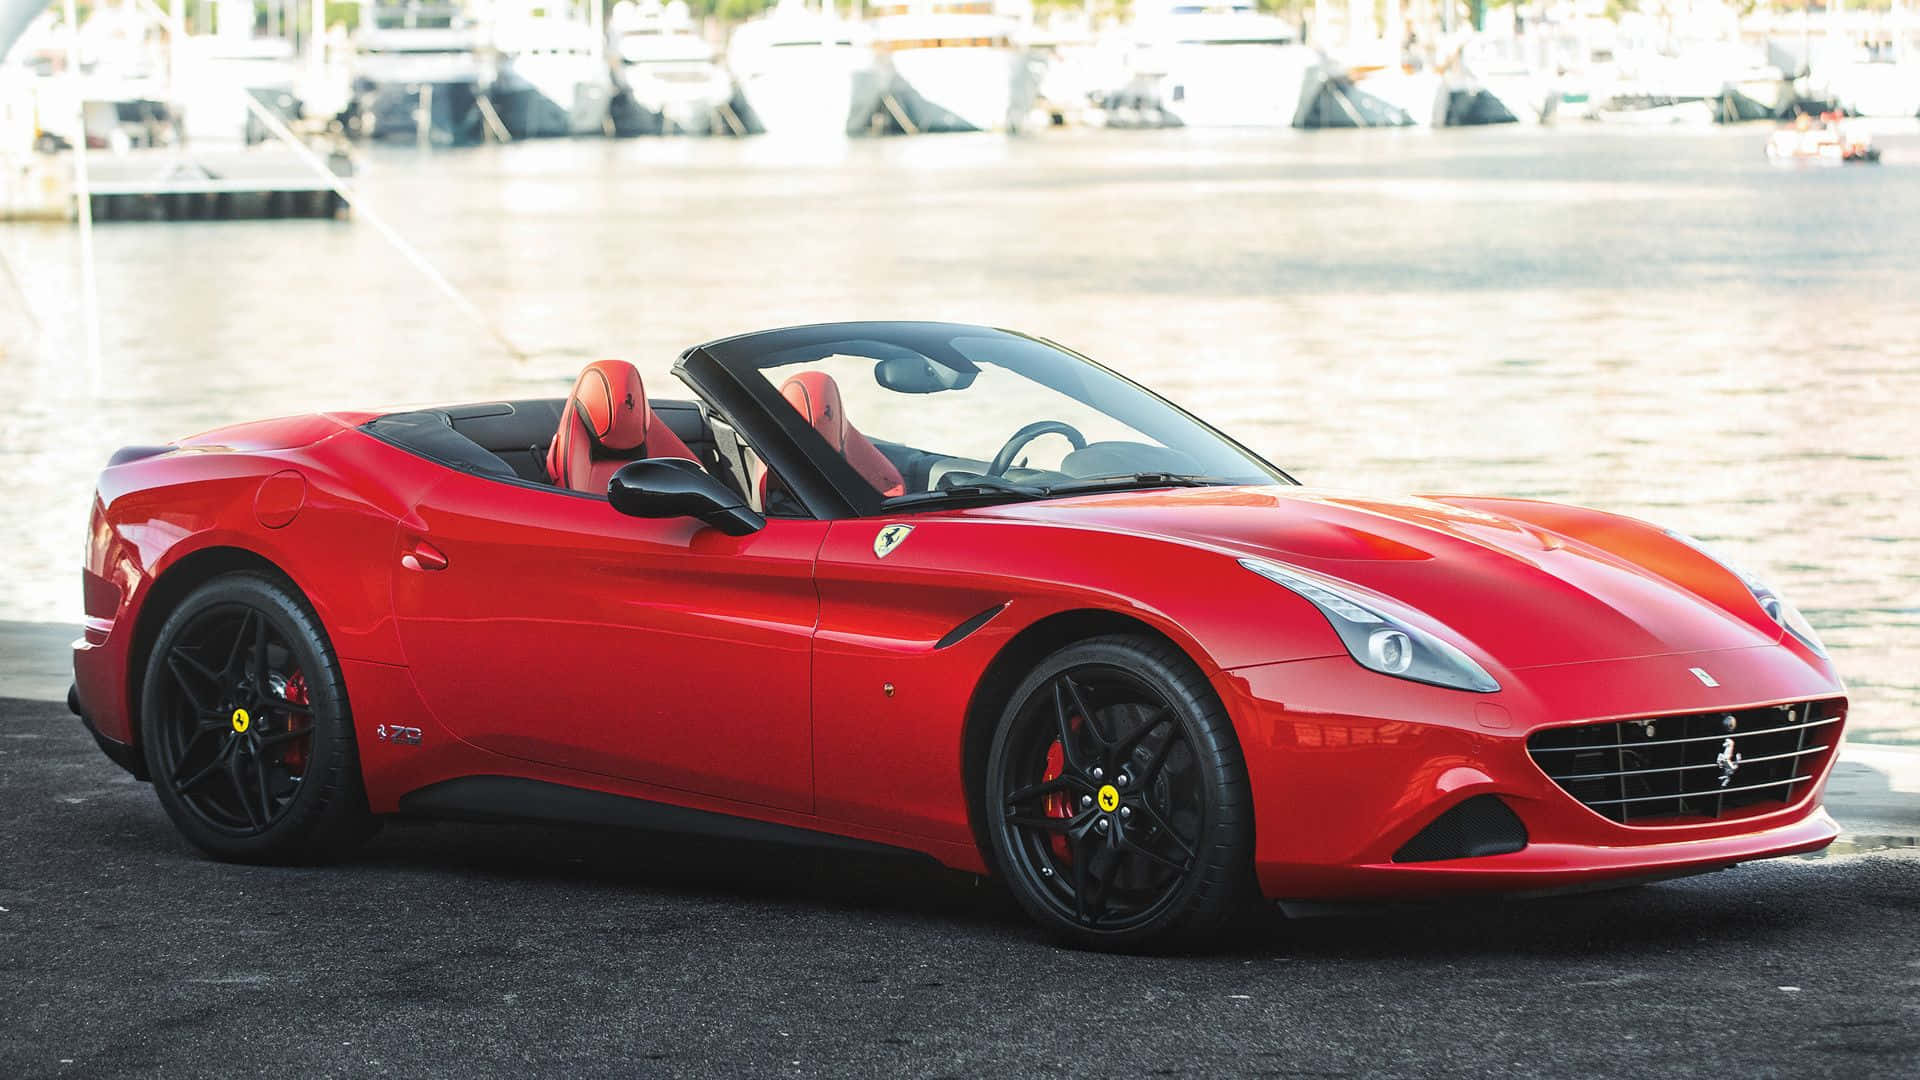 Stunning Ferrari California T in motion Wallpaper